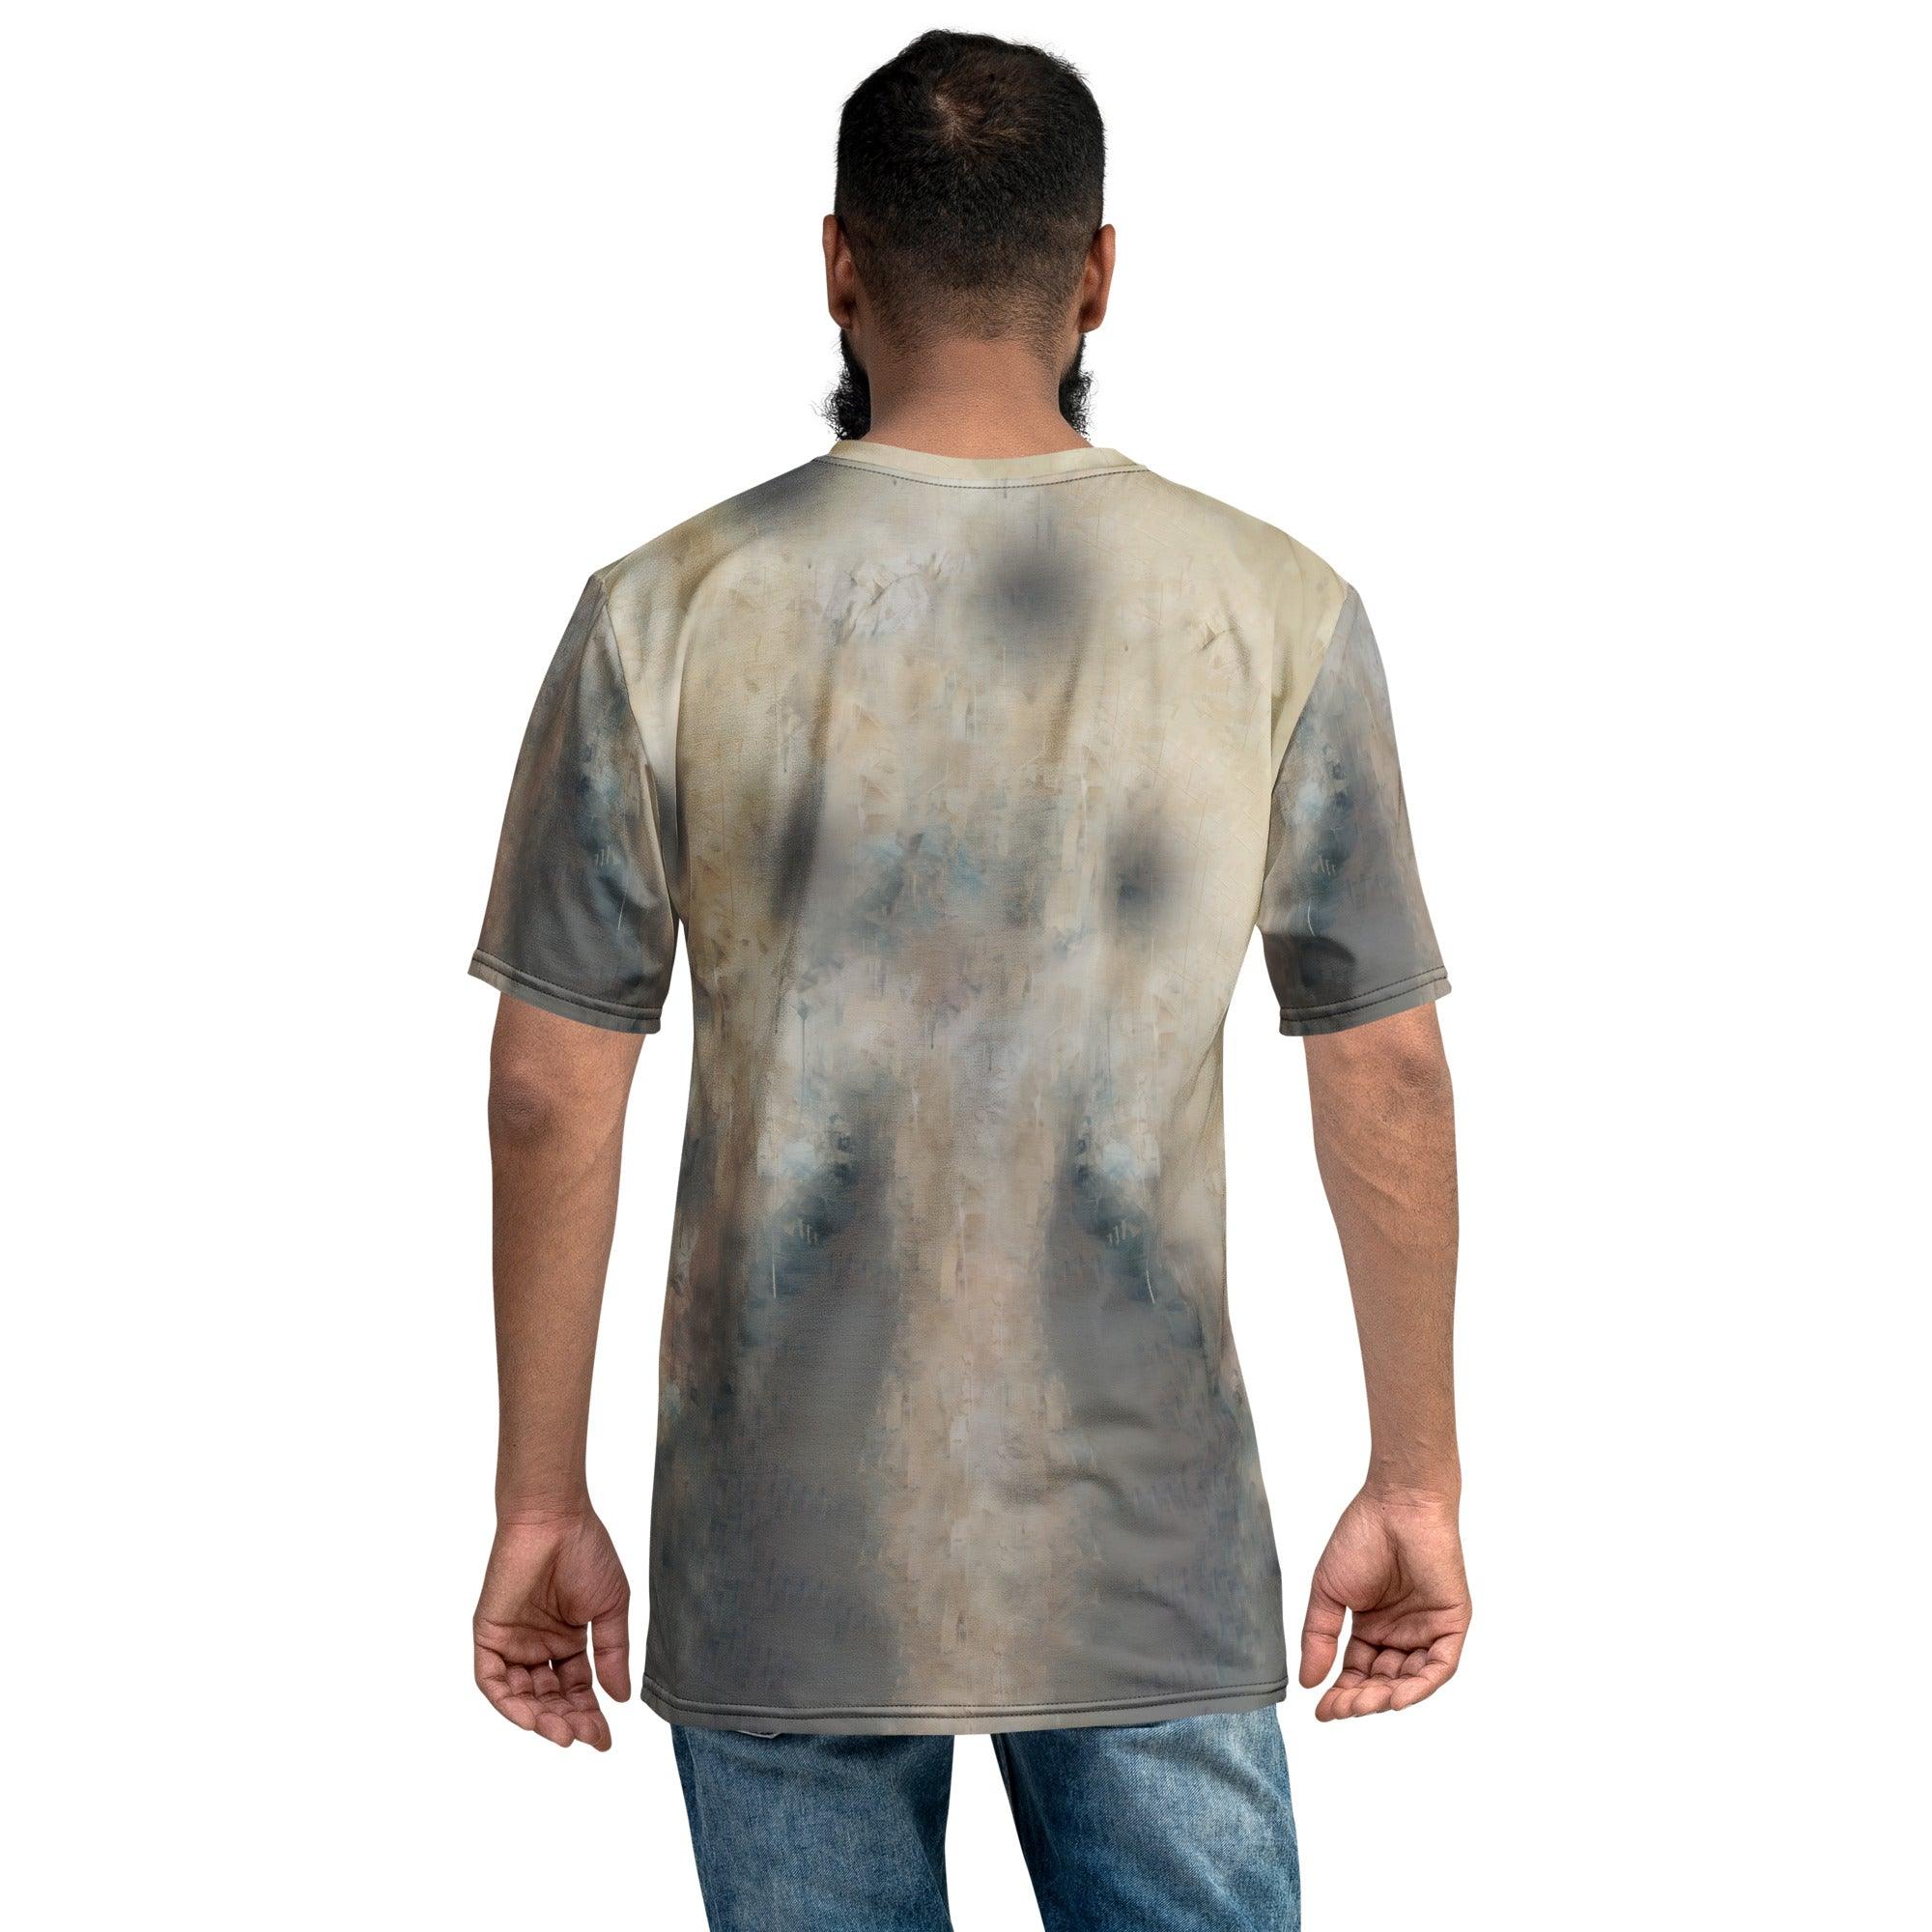 Strumming Star Men's T-Shirt - Beyond T-shirts